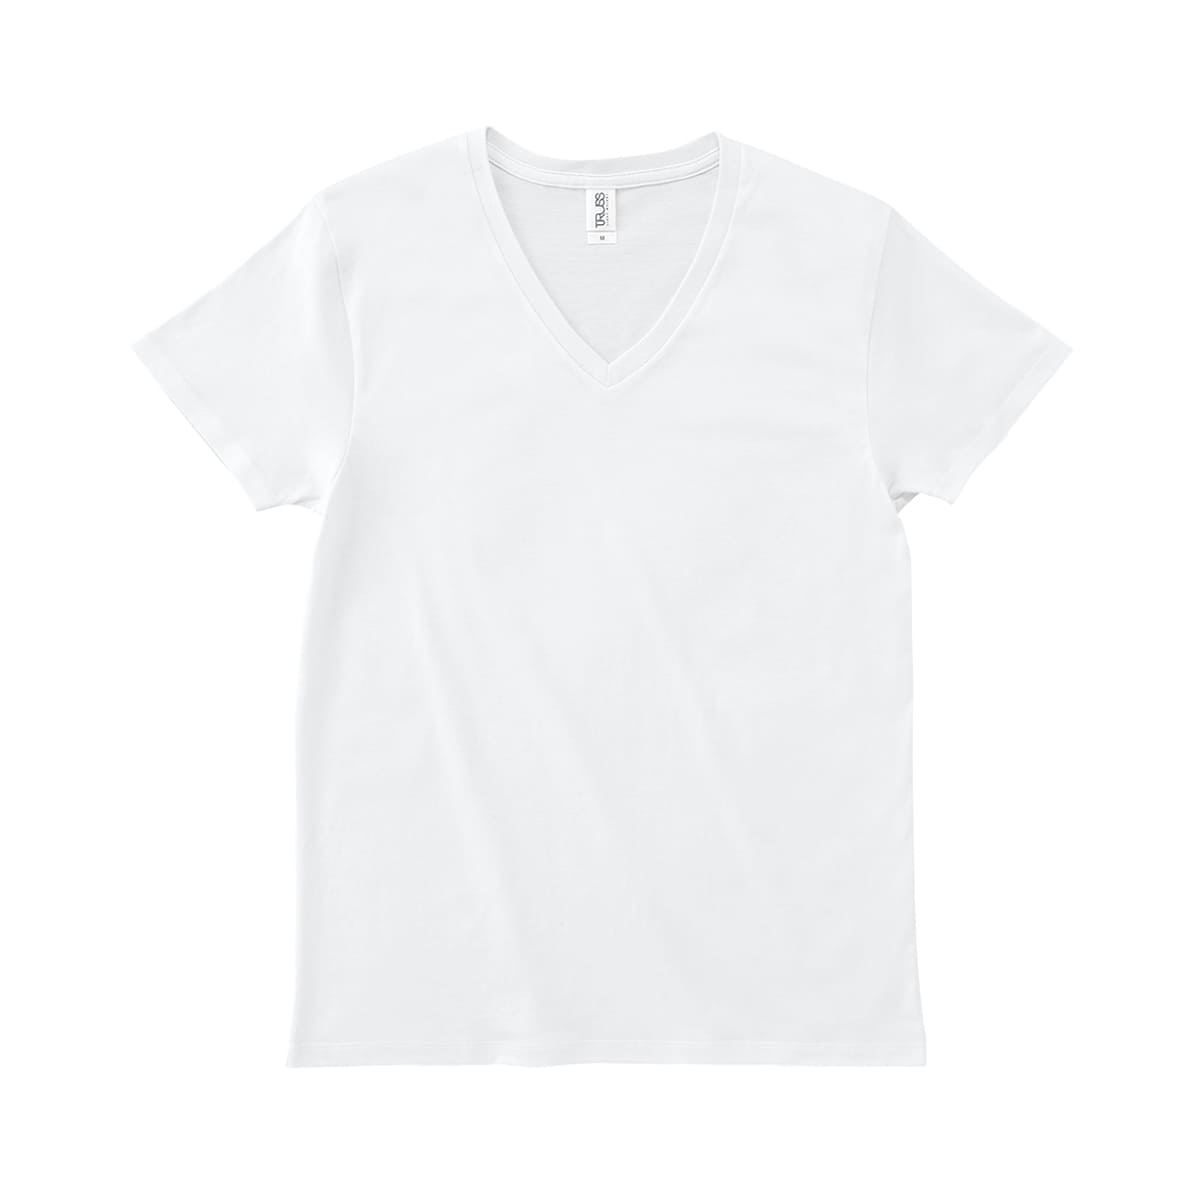 tシャツ メンズ 半袖 TRUSS トラス 4.3オンス スリムフィット VネックＴシャツ sfv1...